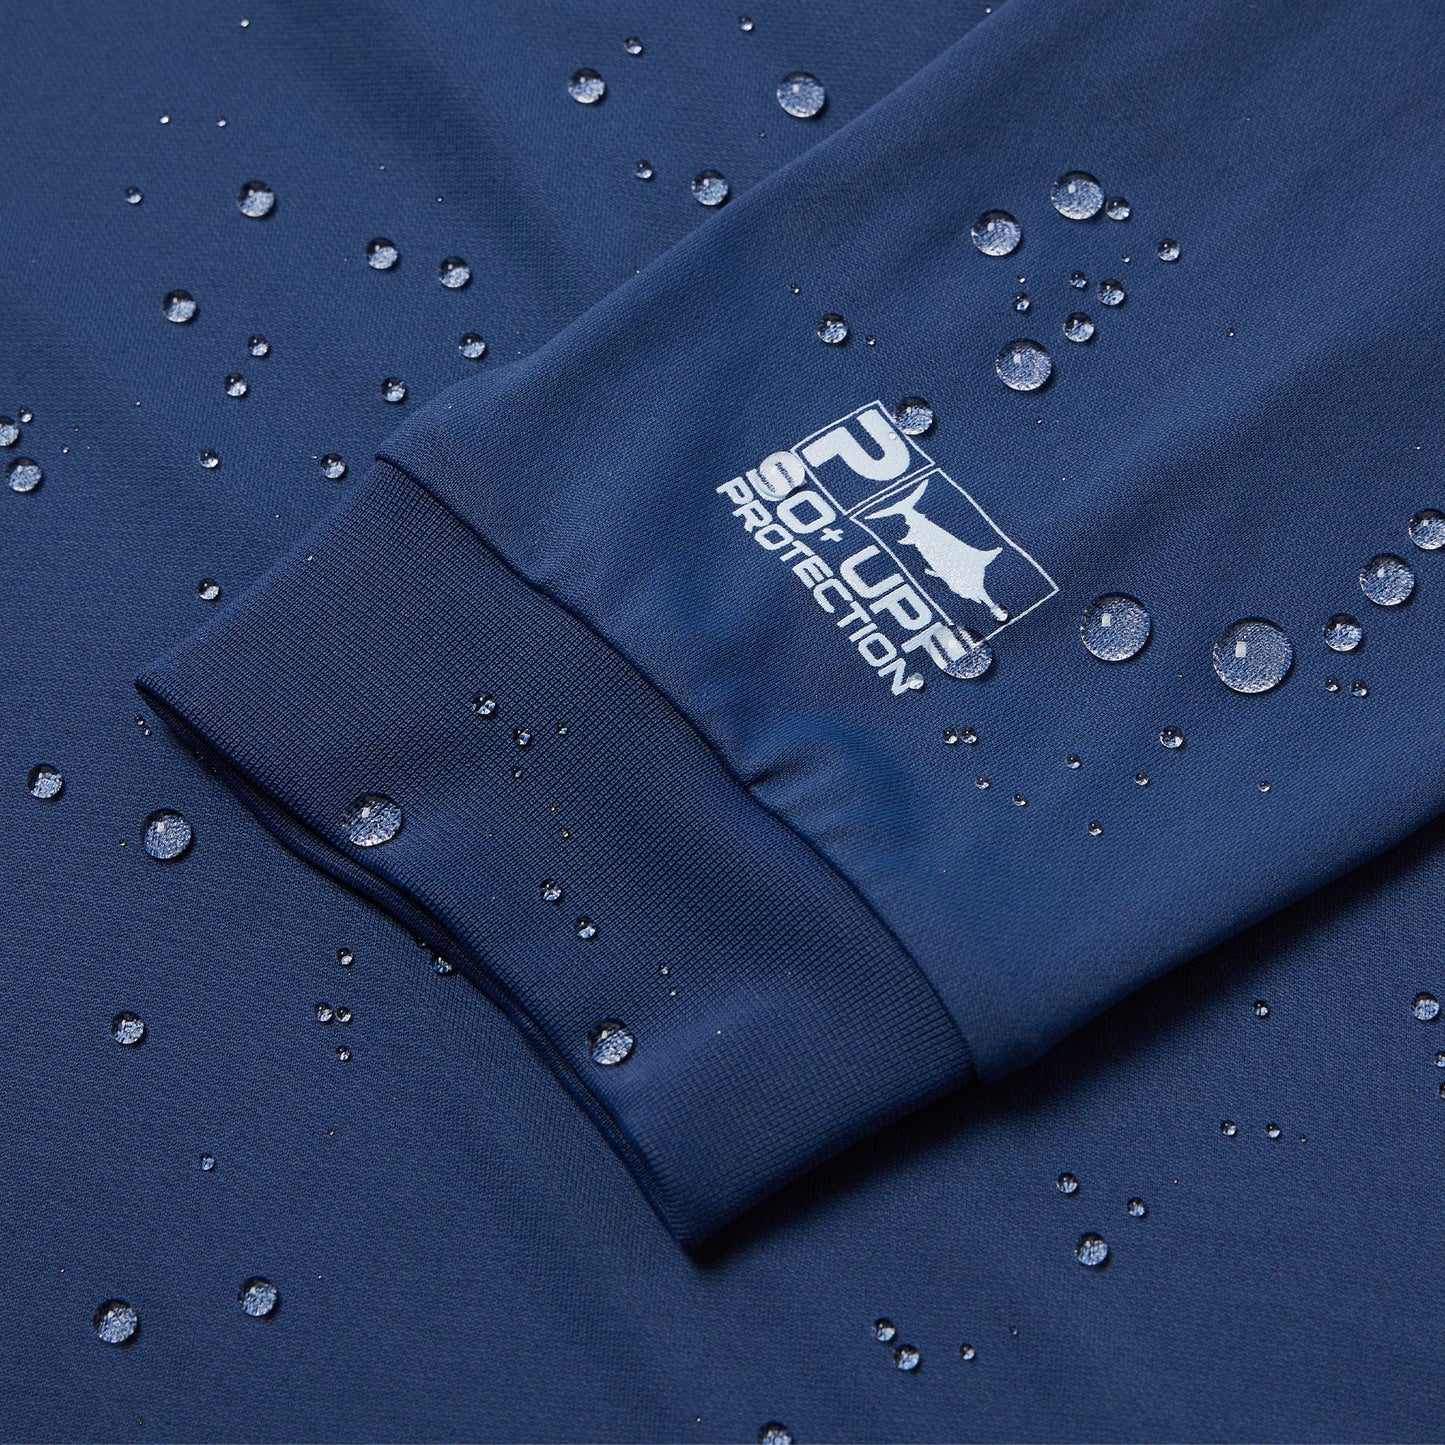 Long Sleeve UPF Sun Shirt - Aquatek Icon Americamo - Smokey Blue